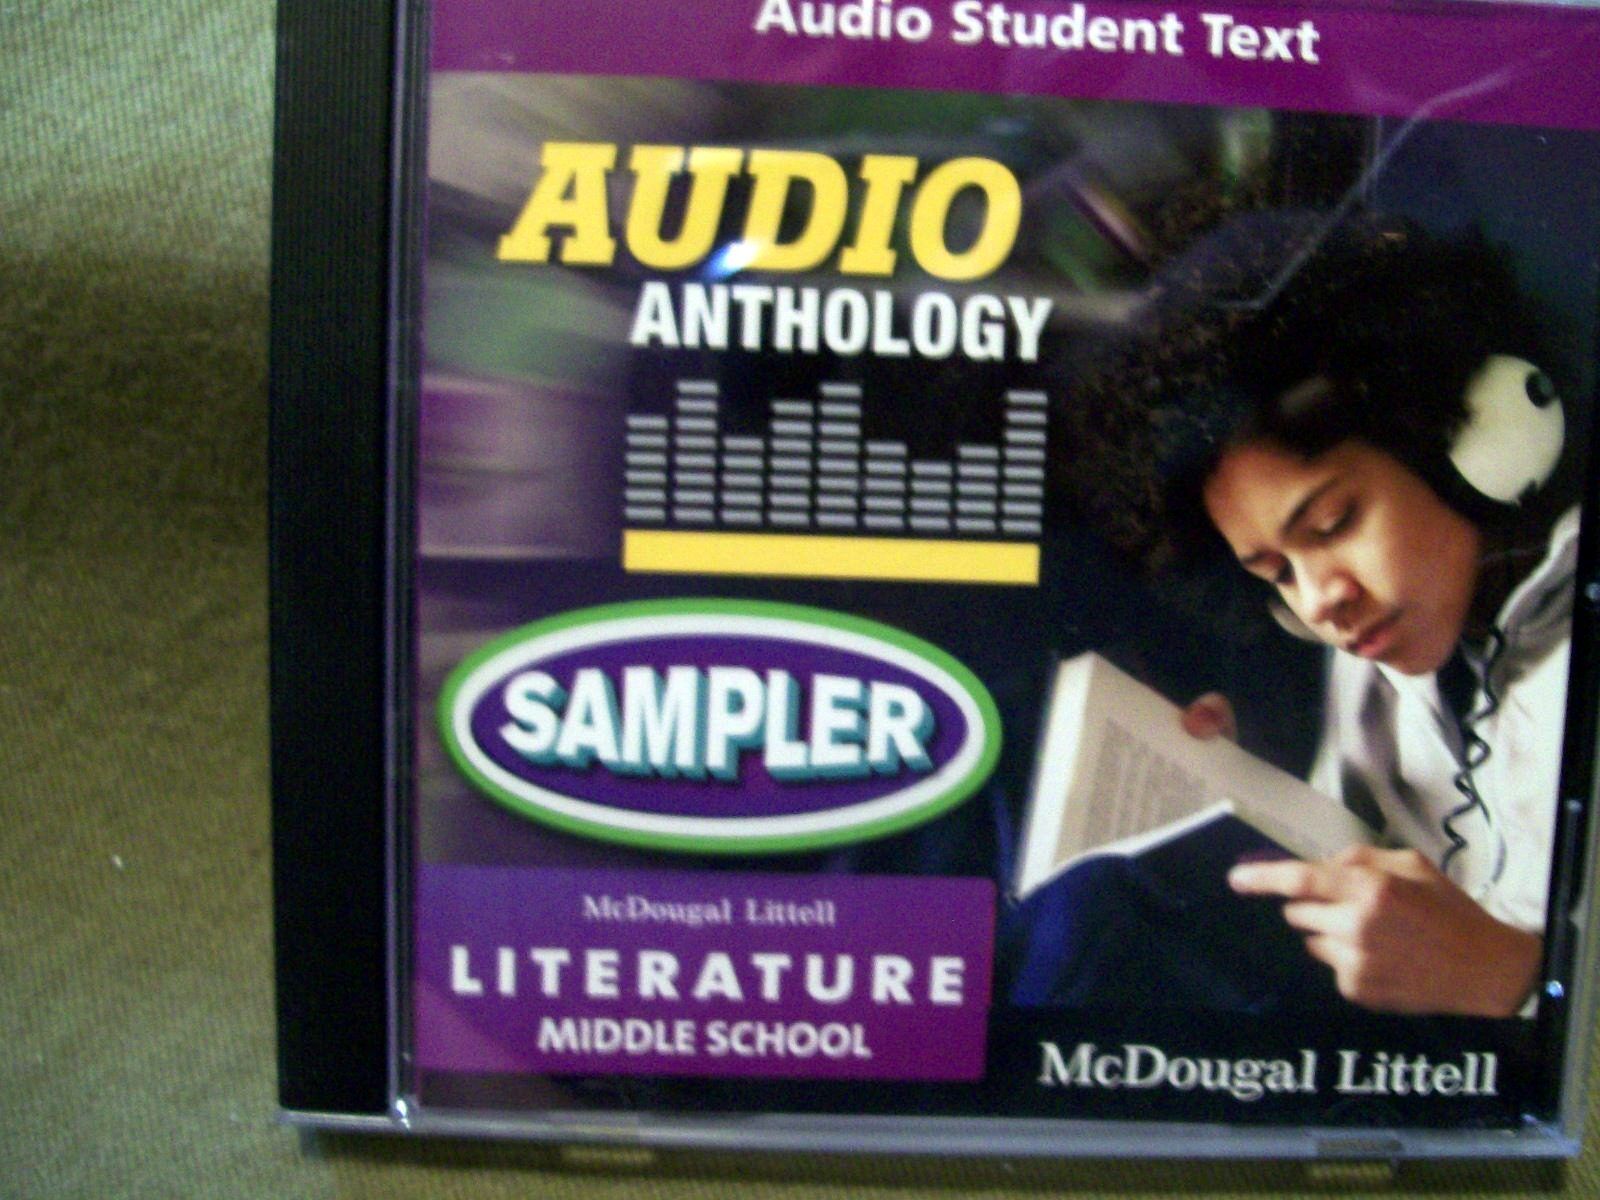 McDougal Littell Middle School Audio Anthology Sampler Audio Student Text CD